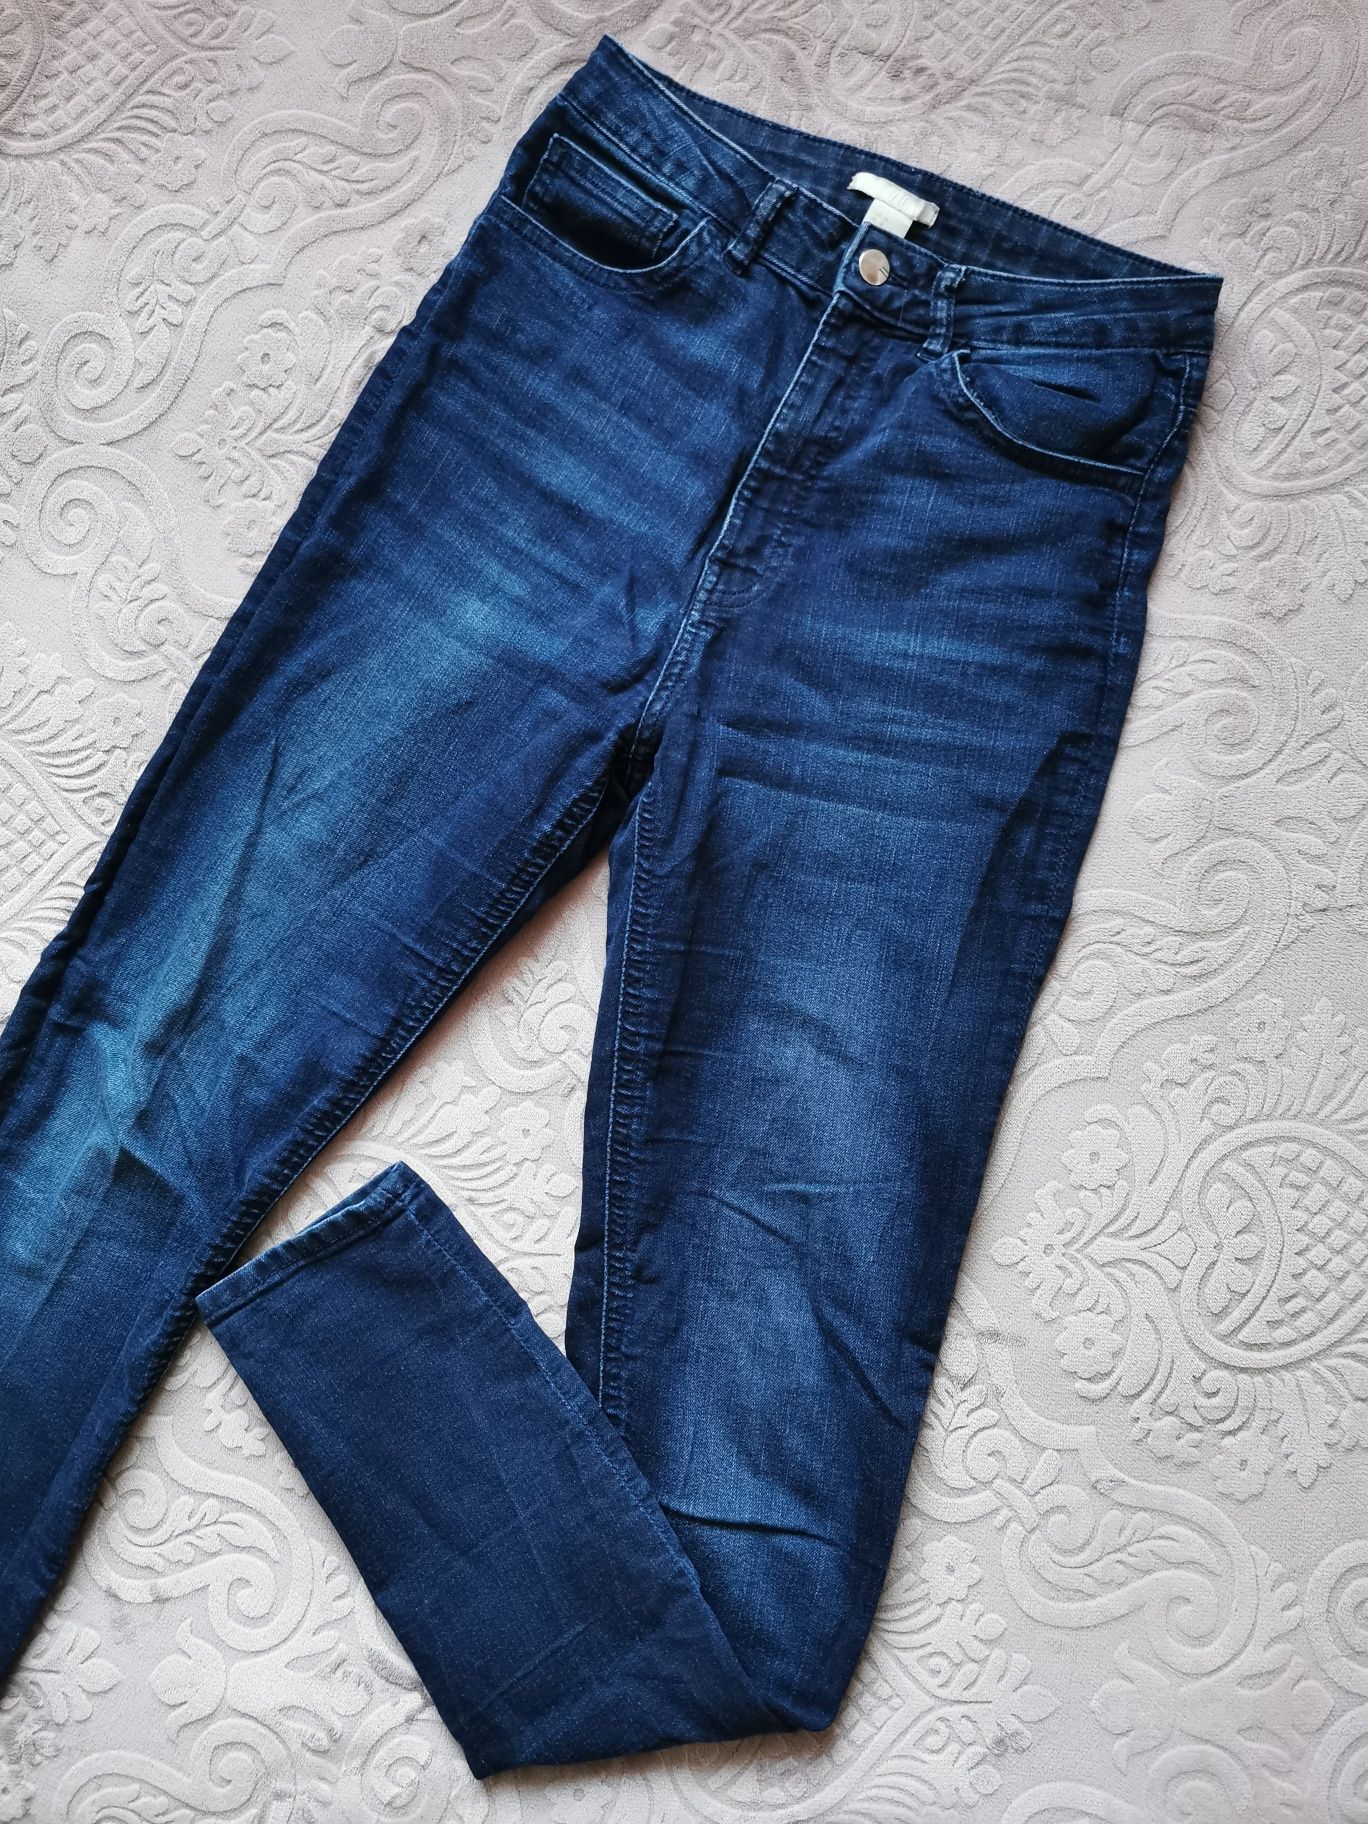 Jeansy dżinsy granatowe H&M wysoki stan skinny M 38 vintage boho